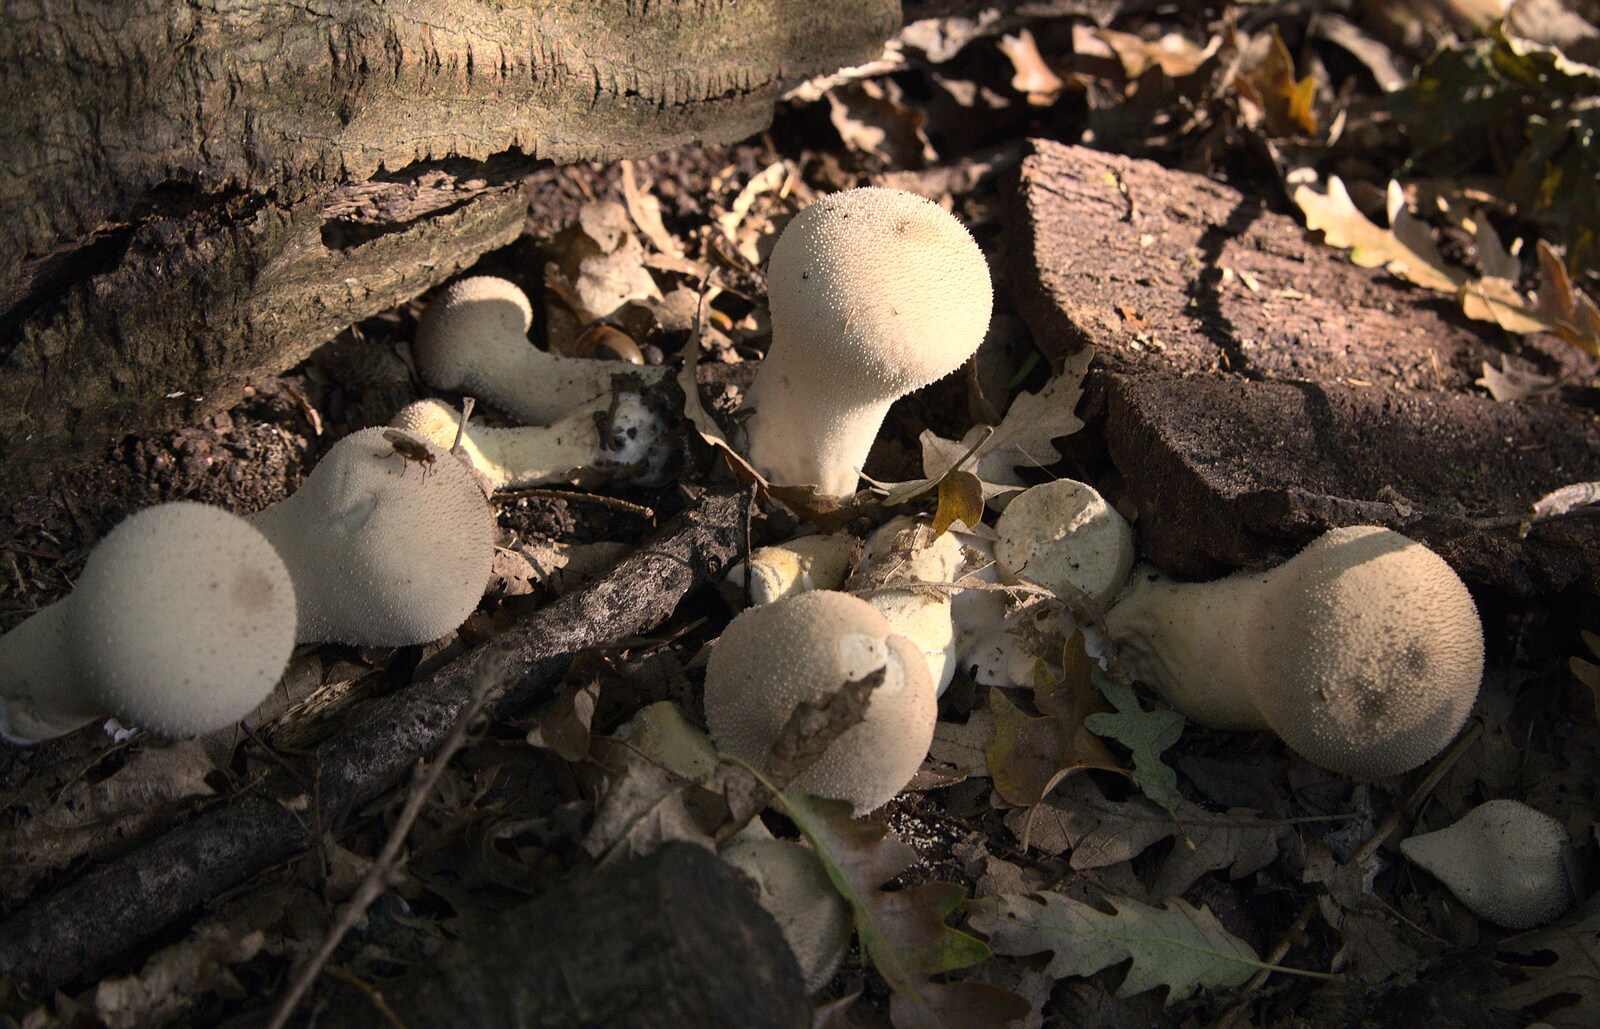 Stippled tops from The Mushrooms of Thornham Estate, Thornham, Suffolk - 4th October 2015